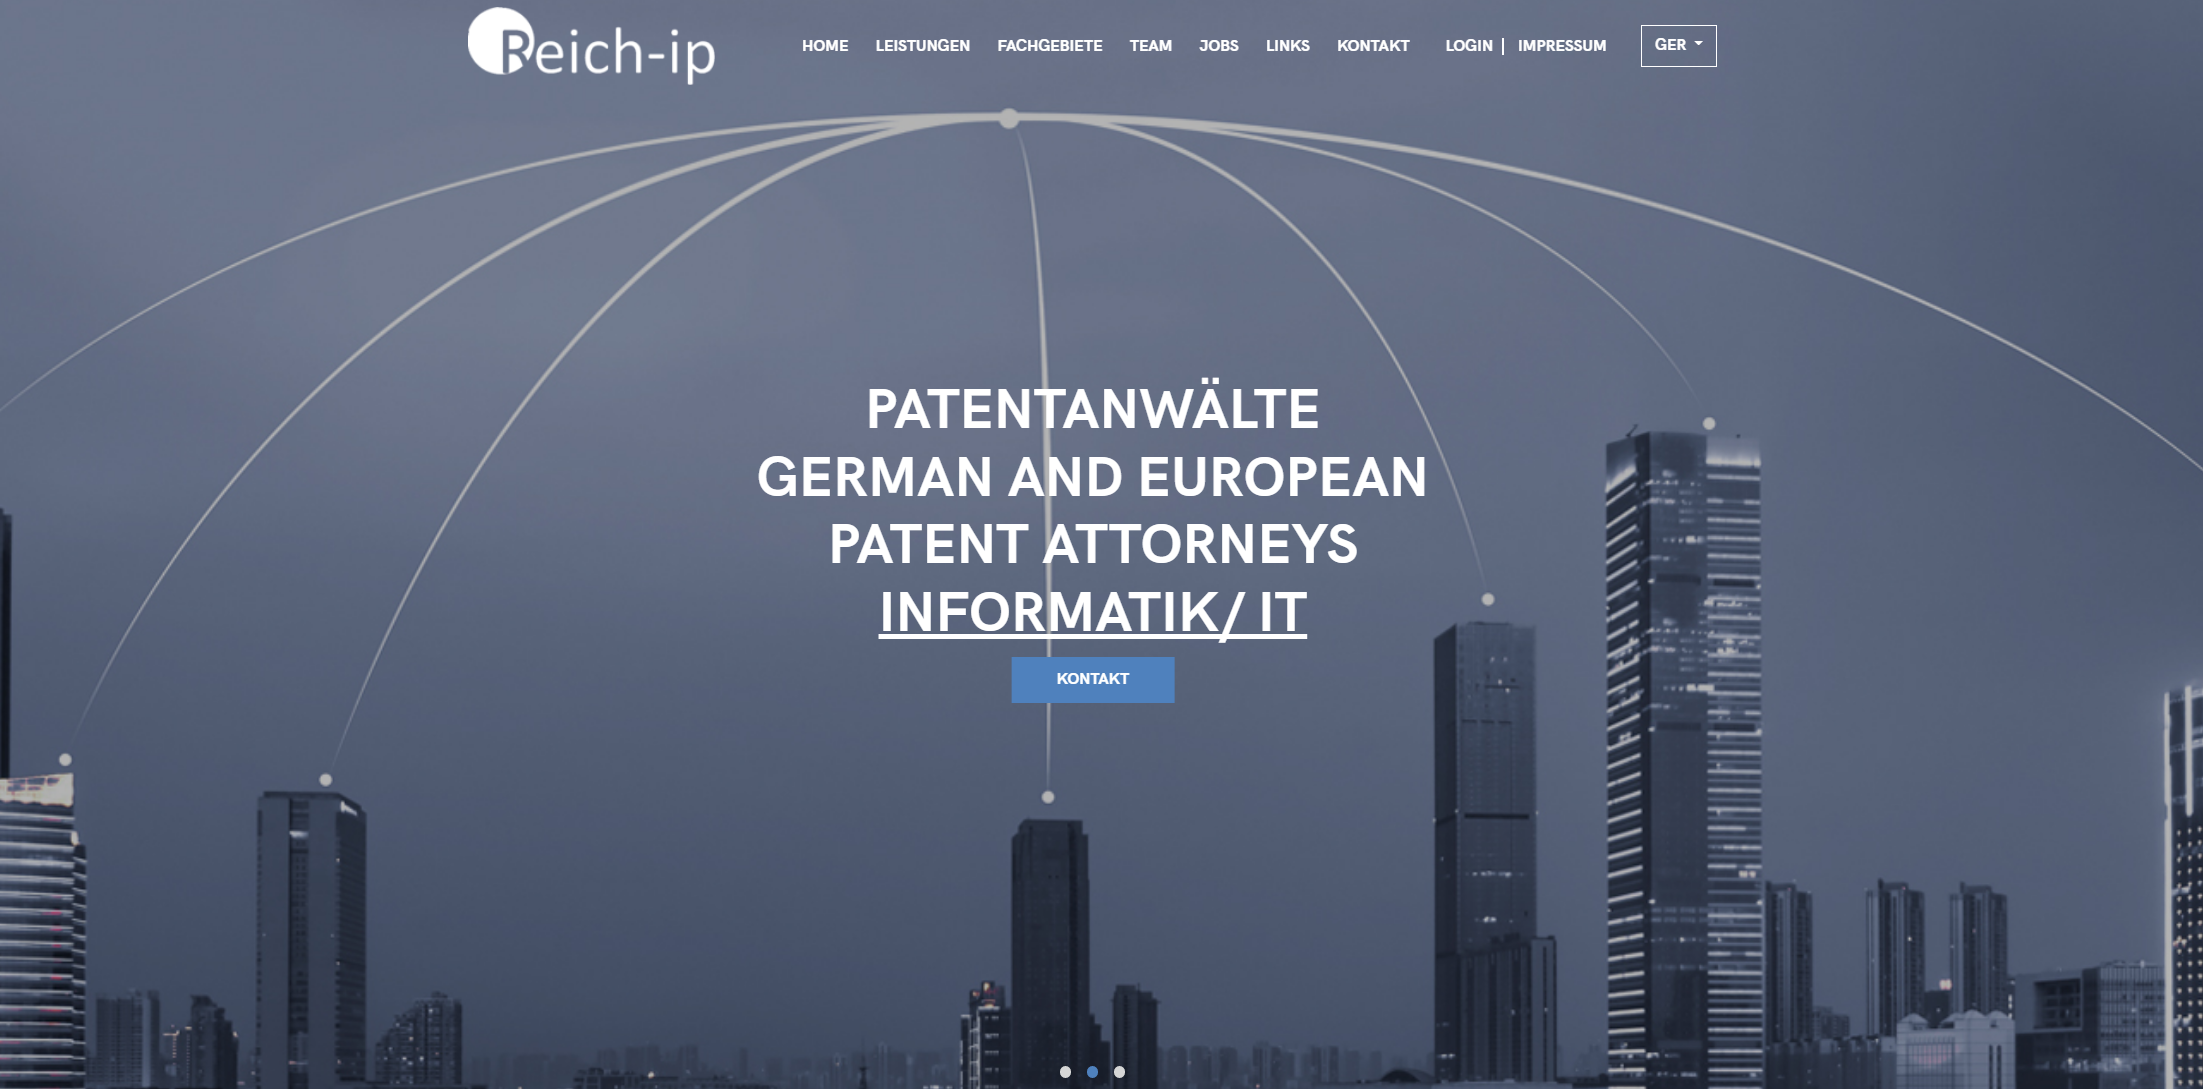 Dr. Jochen Reich, Patentanwalt